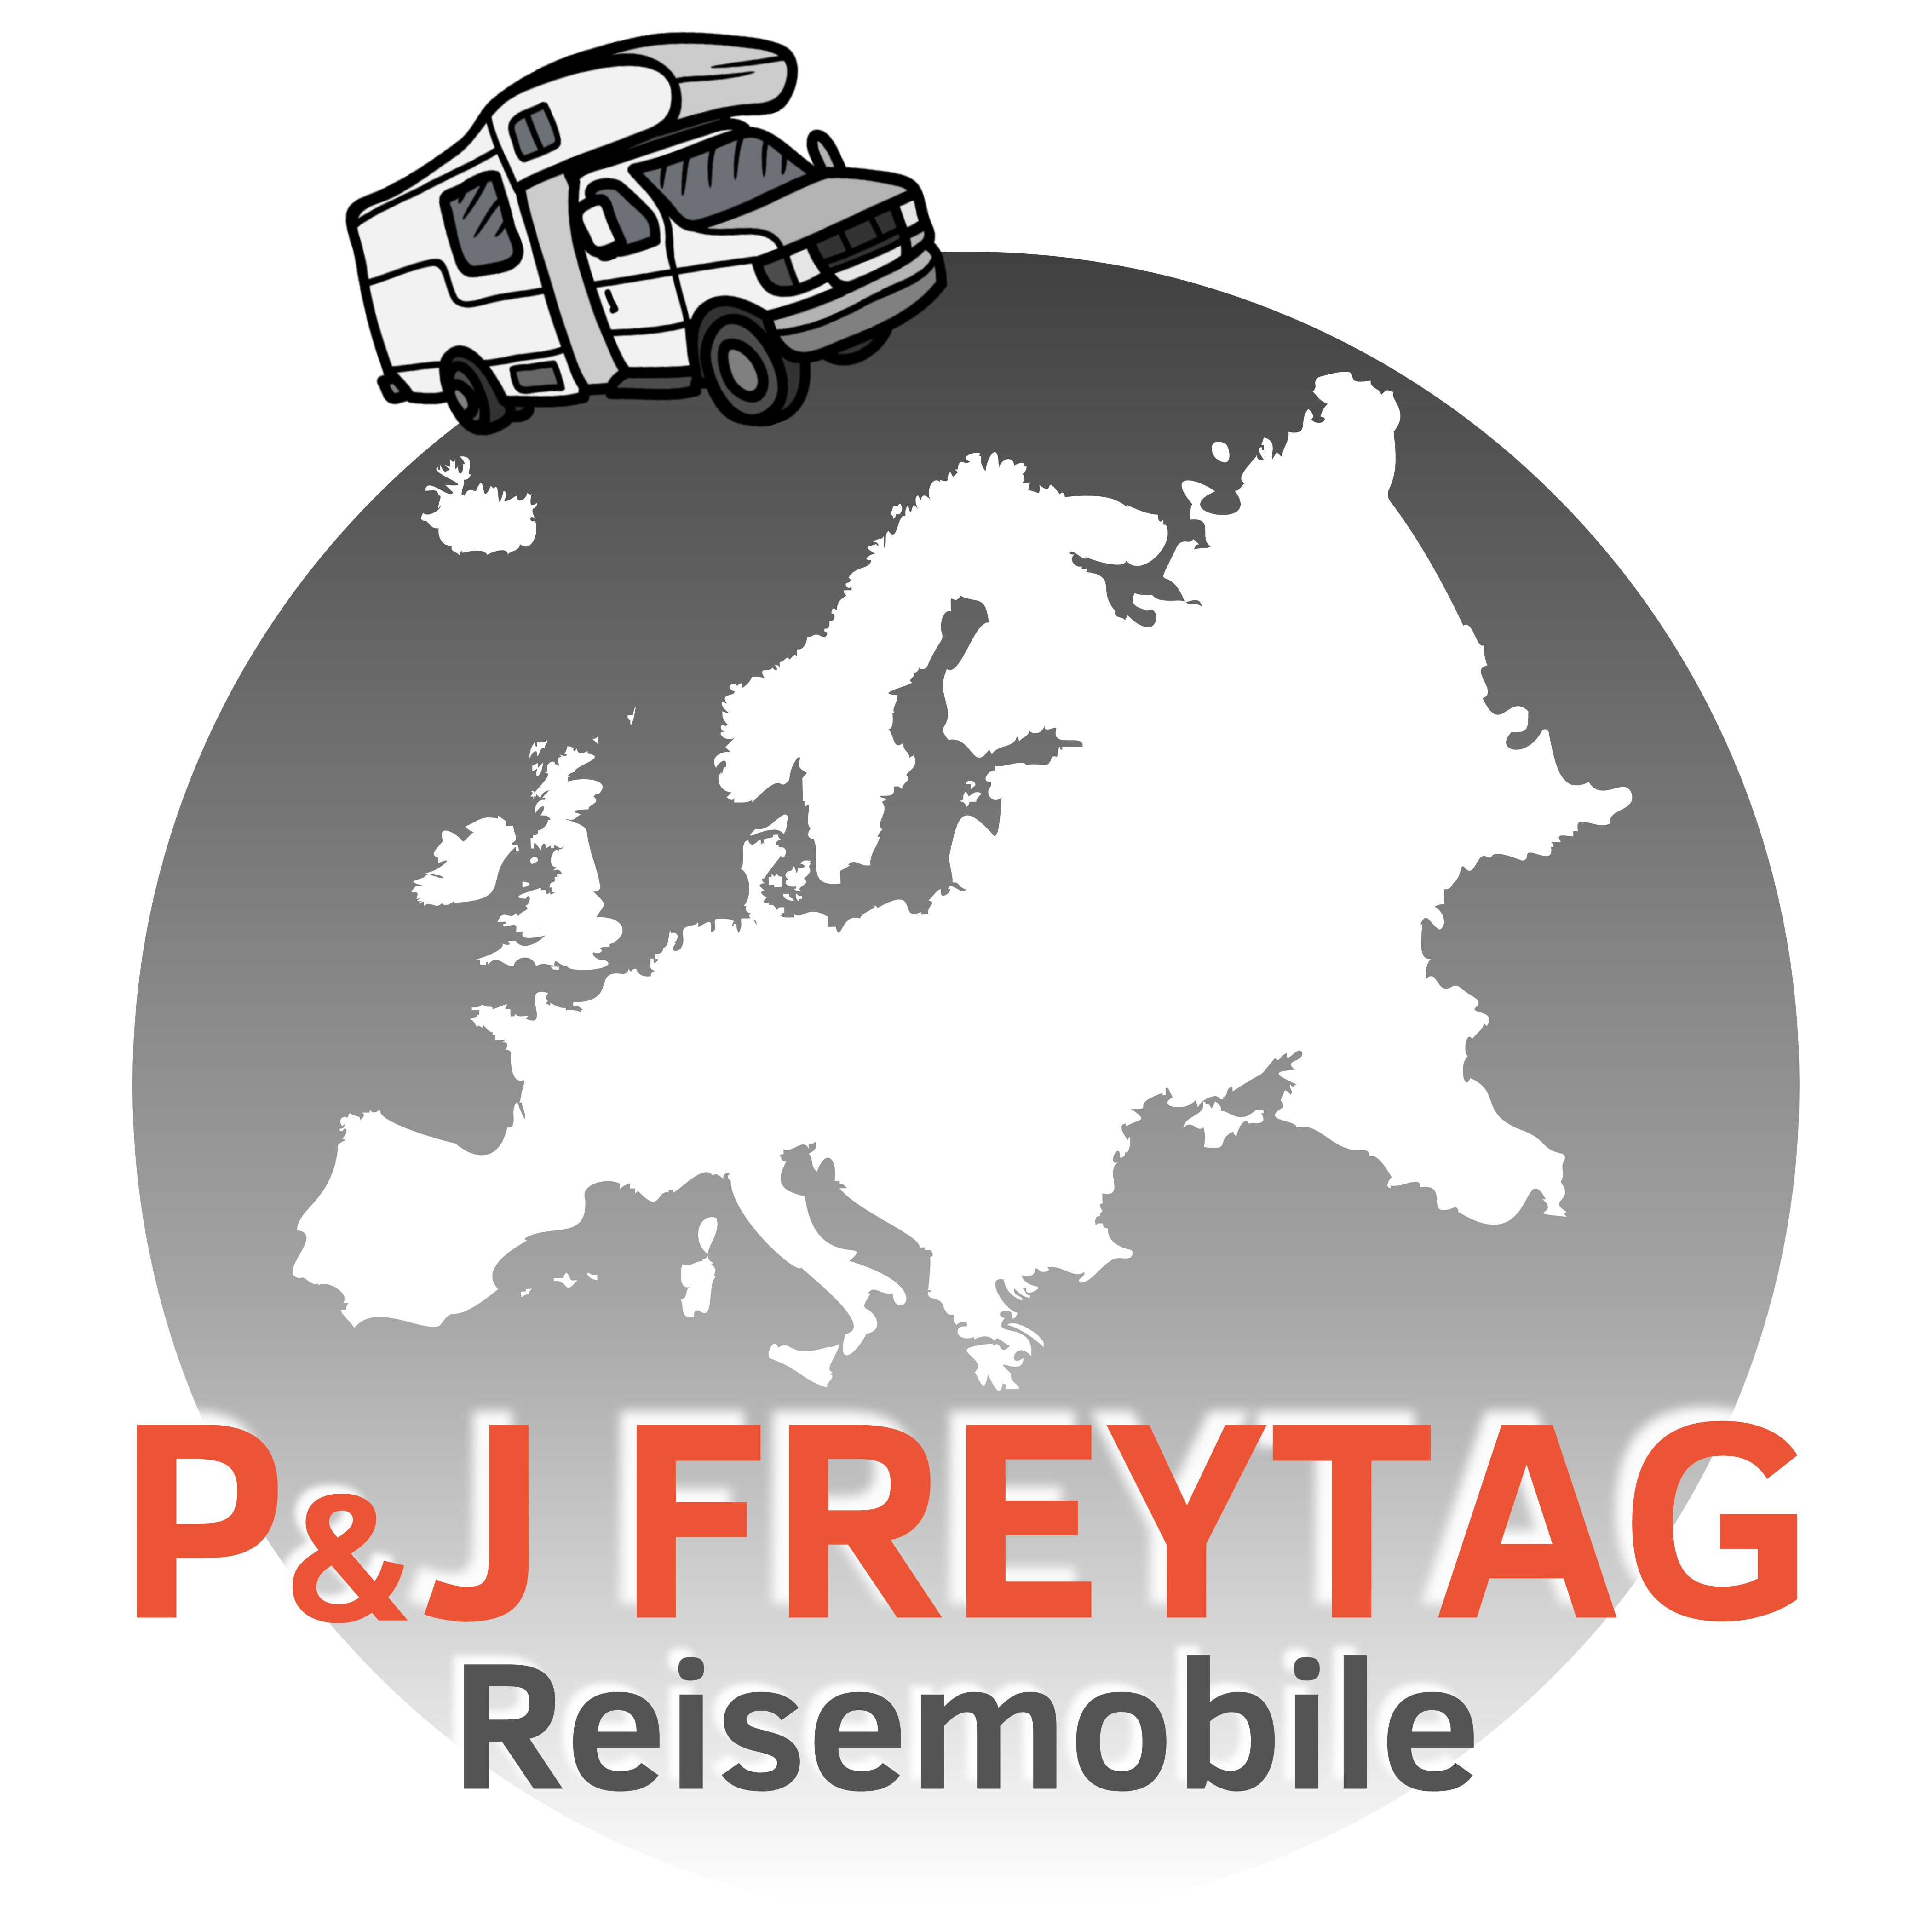 Reisemobile Freytag